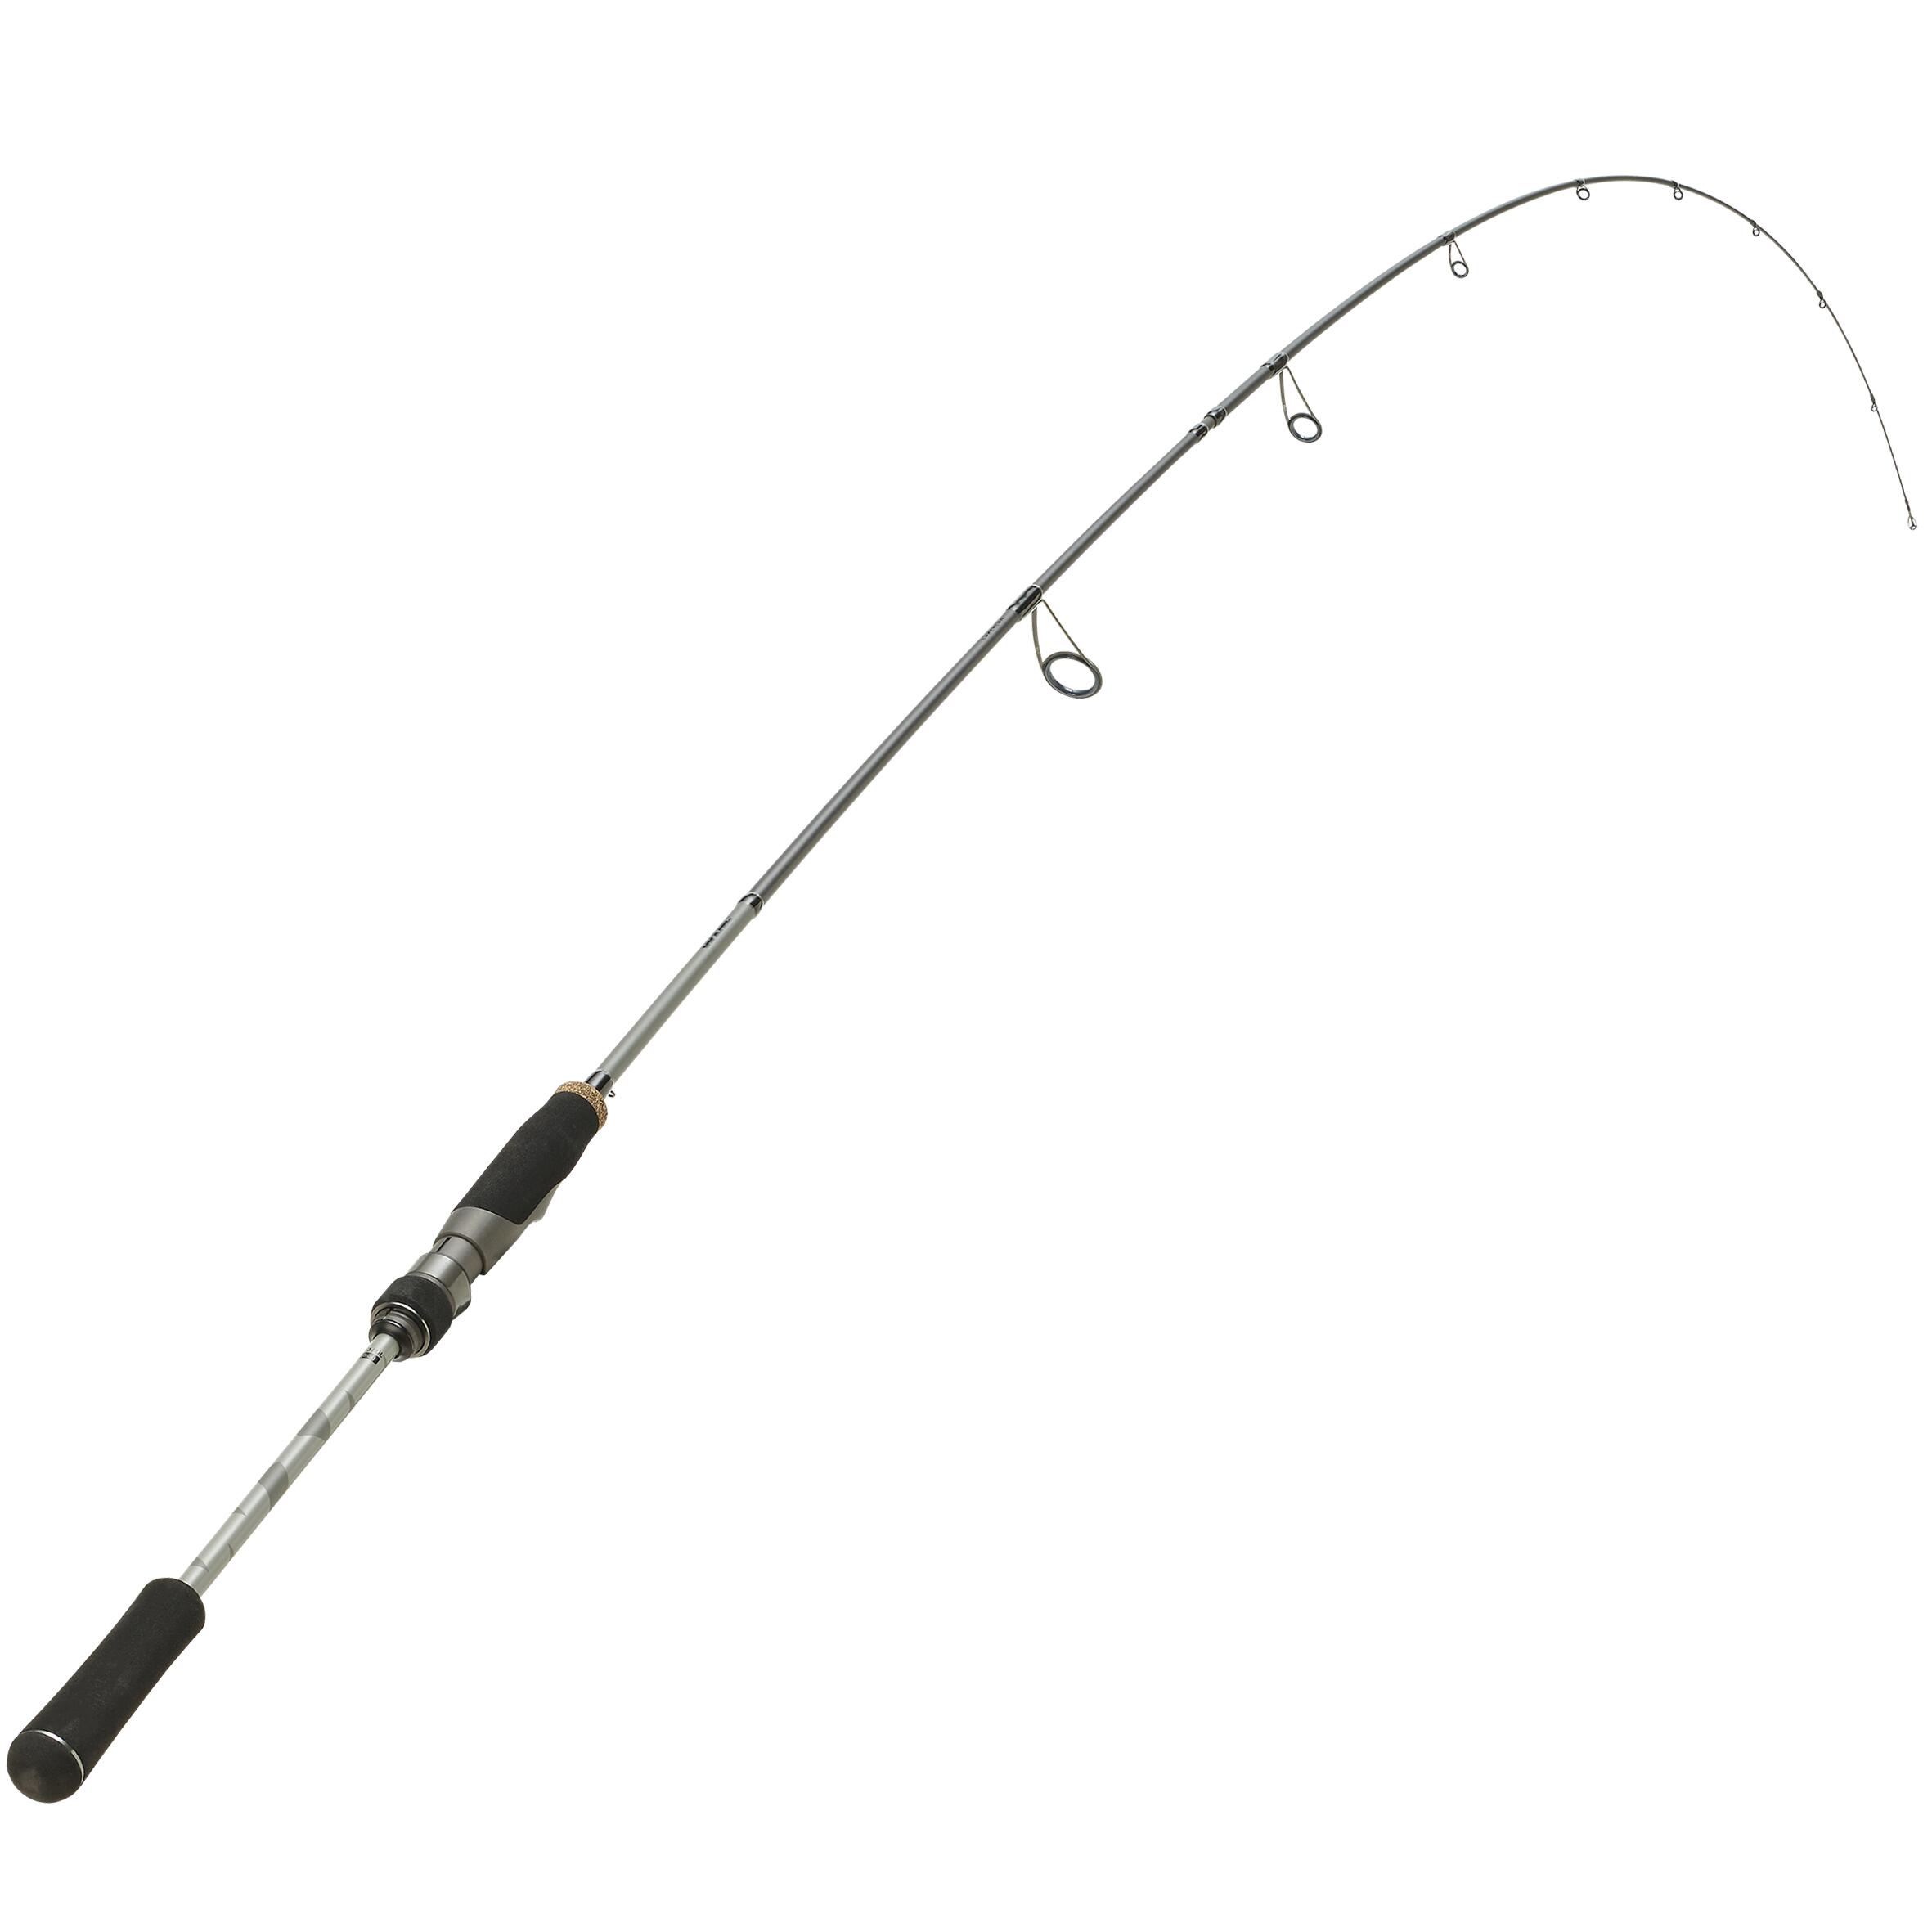 Caperlan Lure Fishing Rod Wxm-5 210 UL STF - One Size